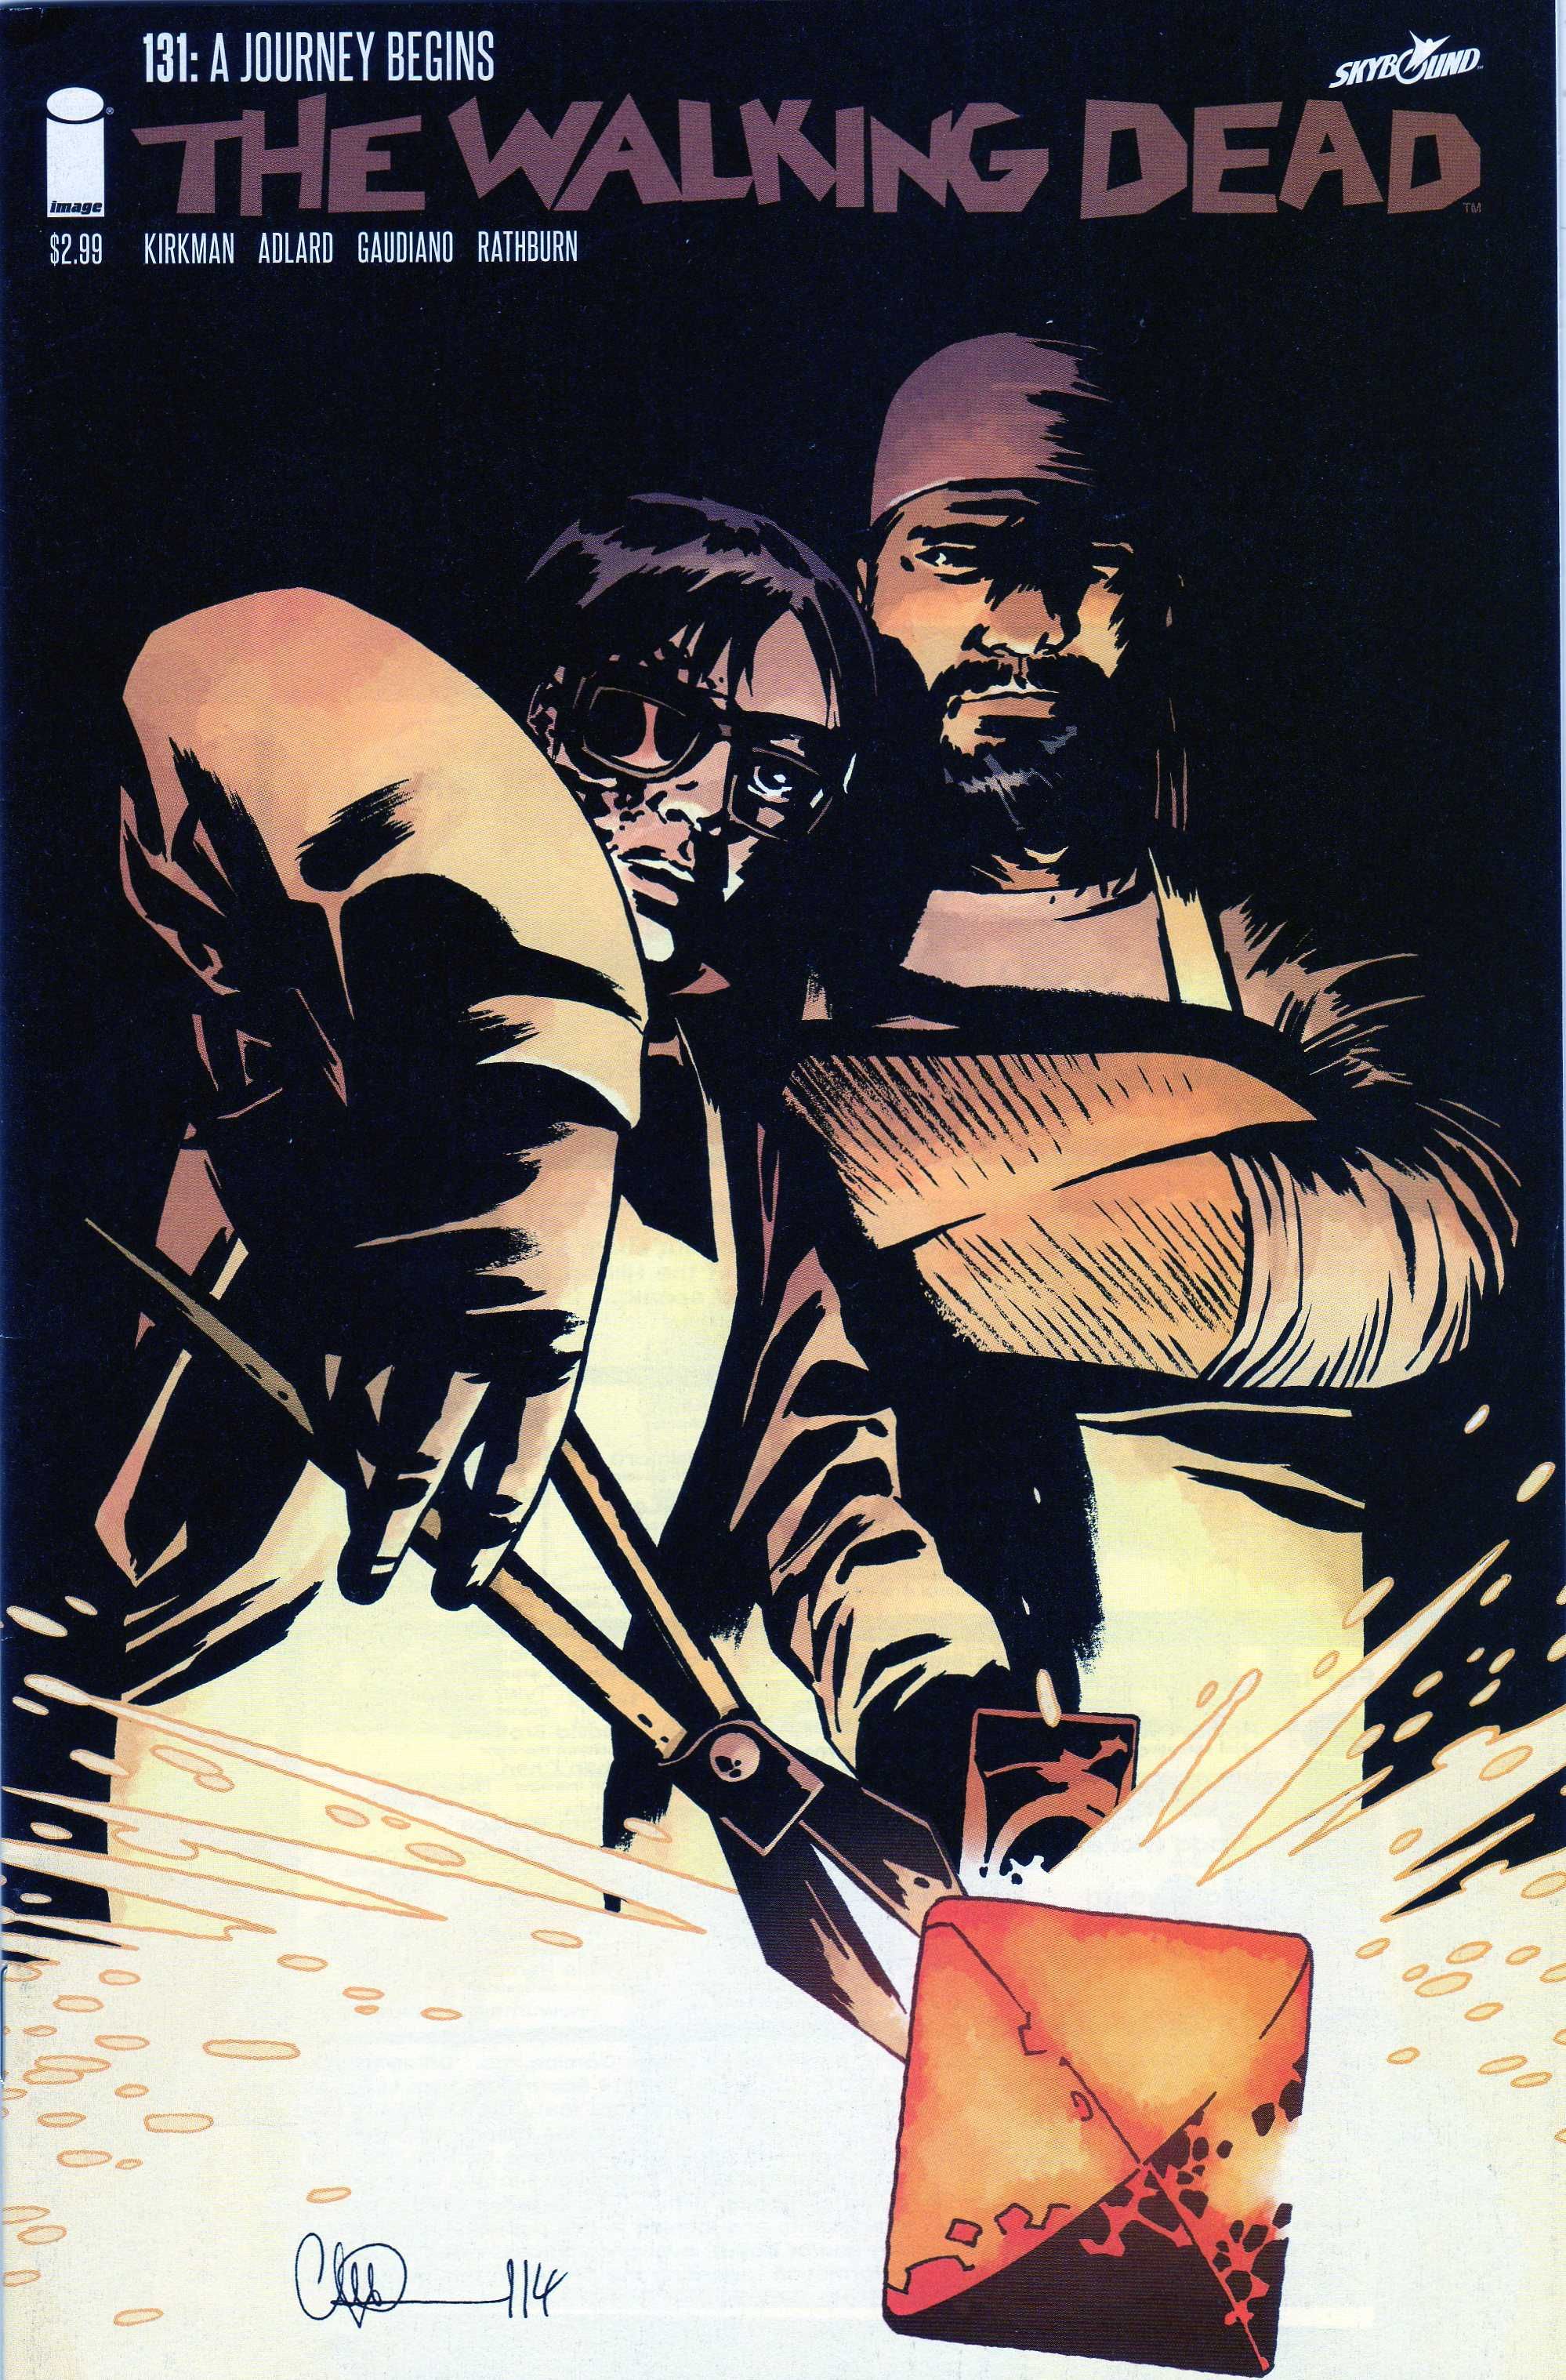 The Walking Dead Michonne Special #1 si alte titluri cheie